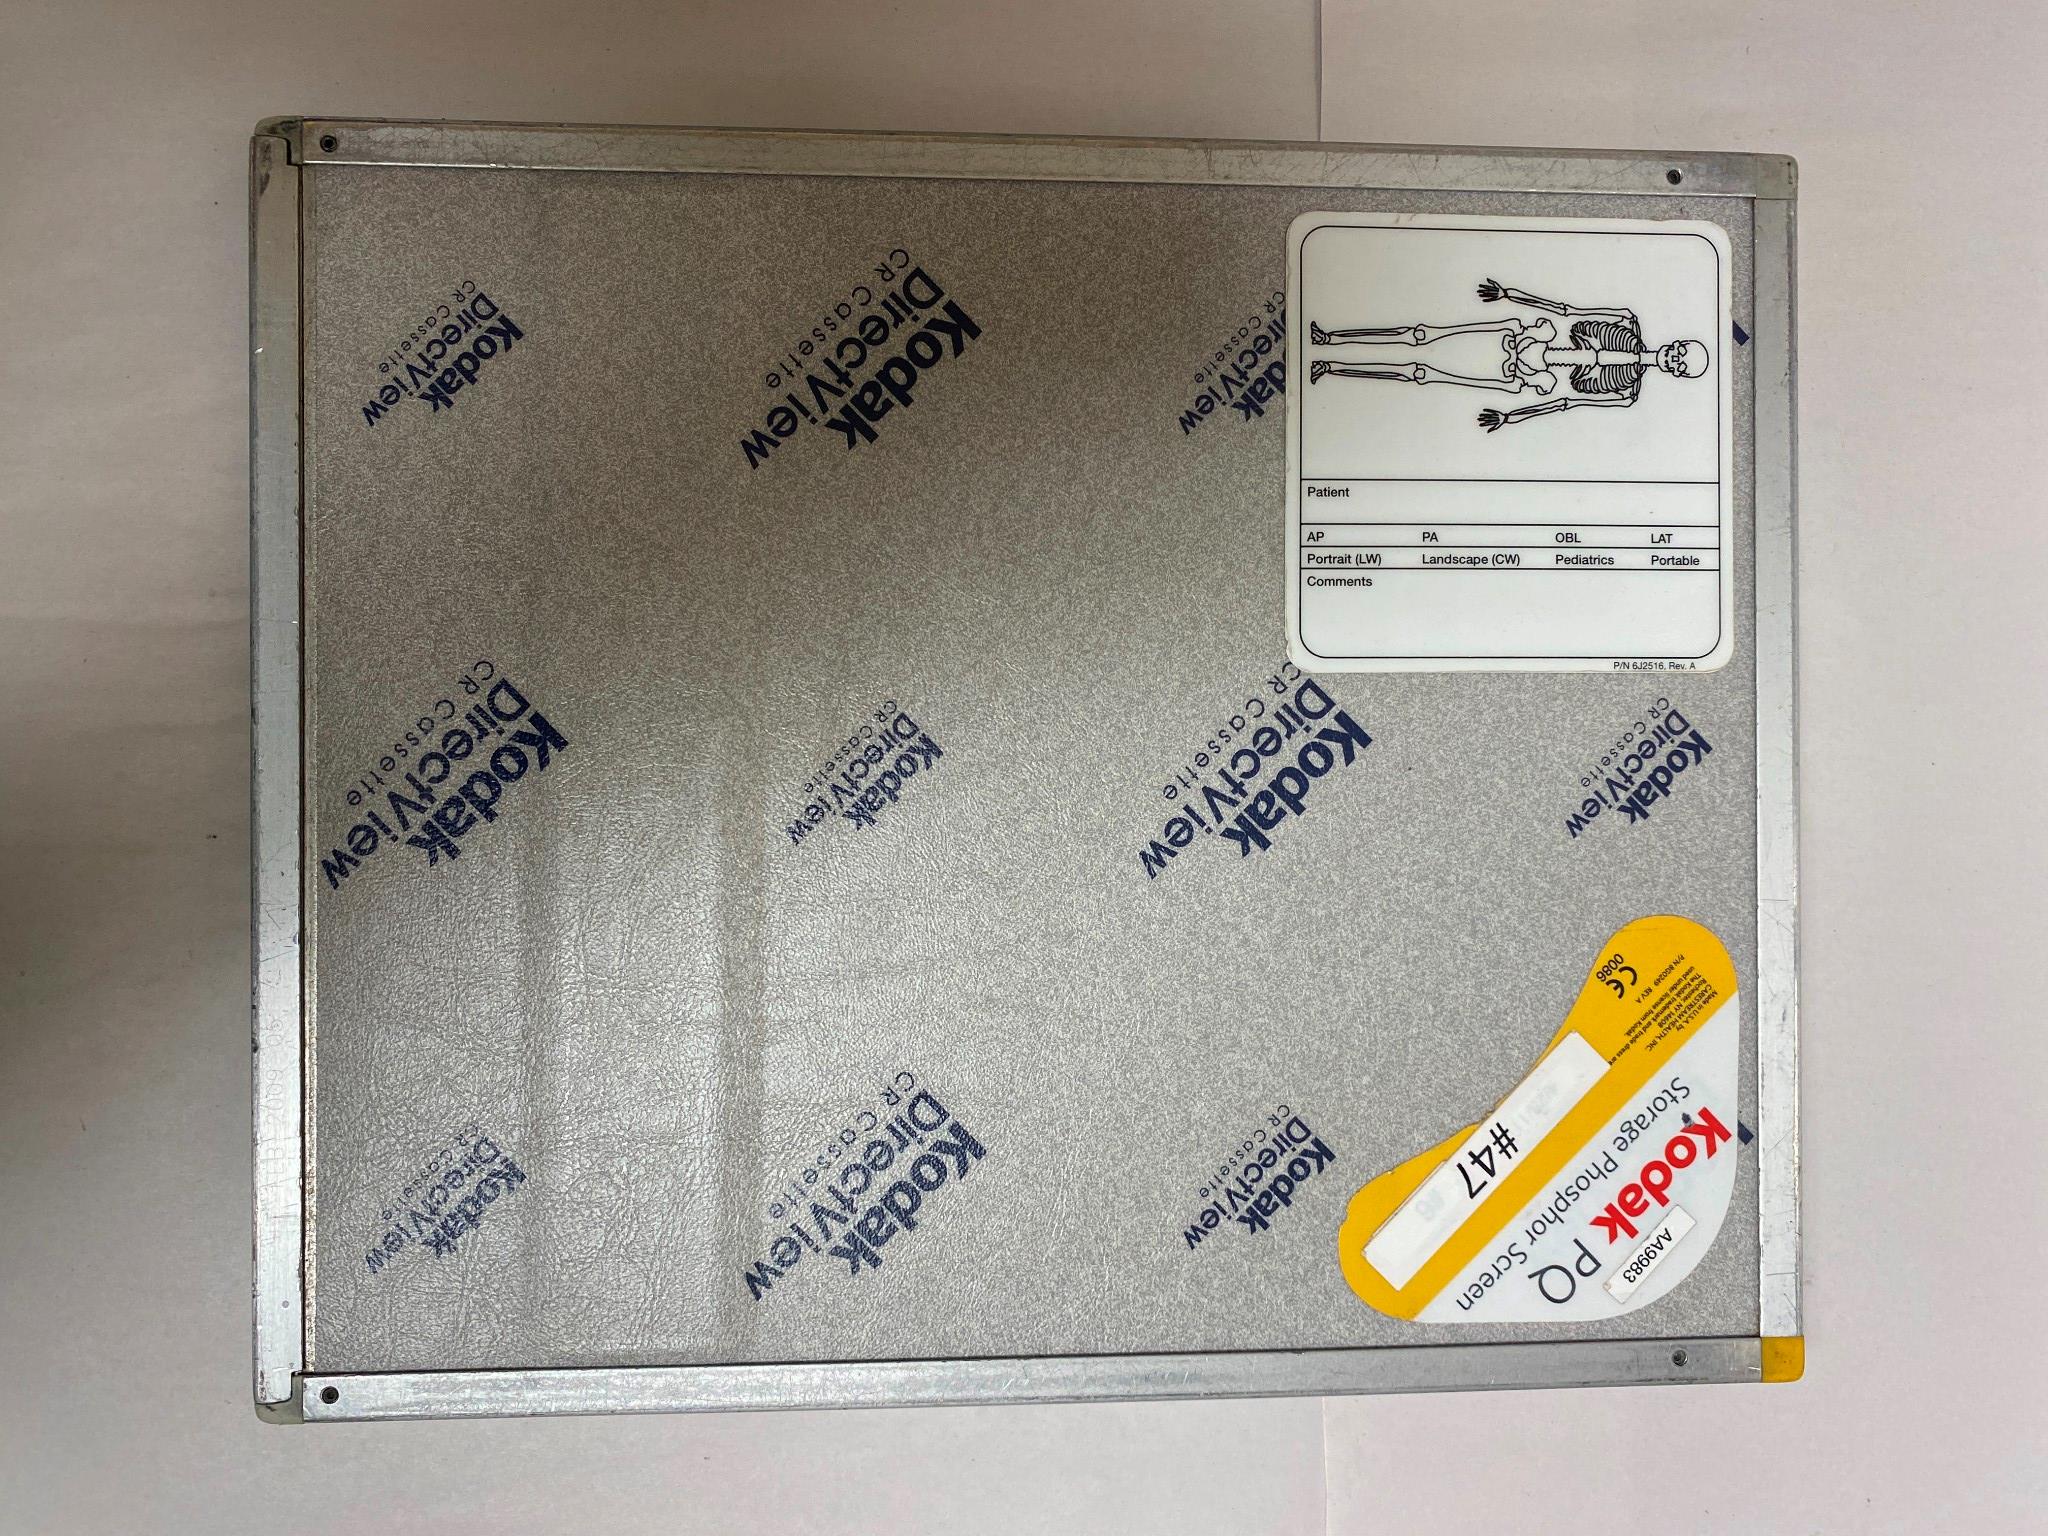 Xray CR Cassette (33X27cm) - 6F1581 Kodak DirectView DIAGNOSTIC ULTRASOUND MACHINES FOR SALE